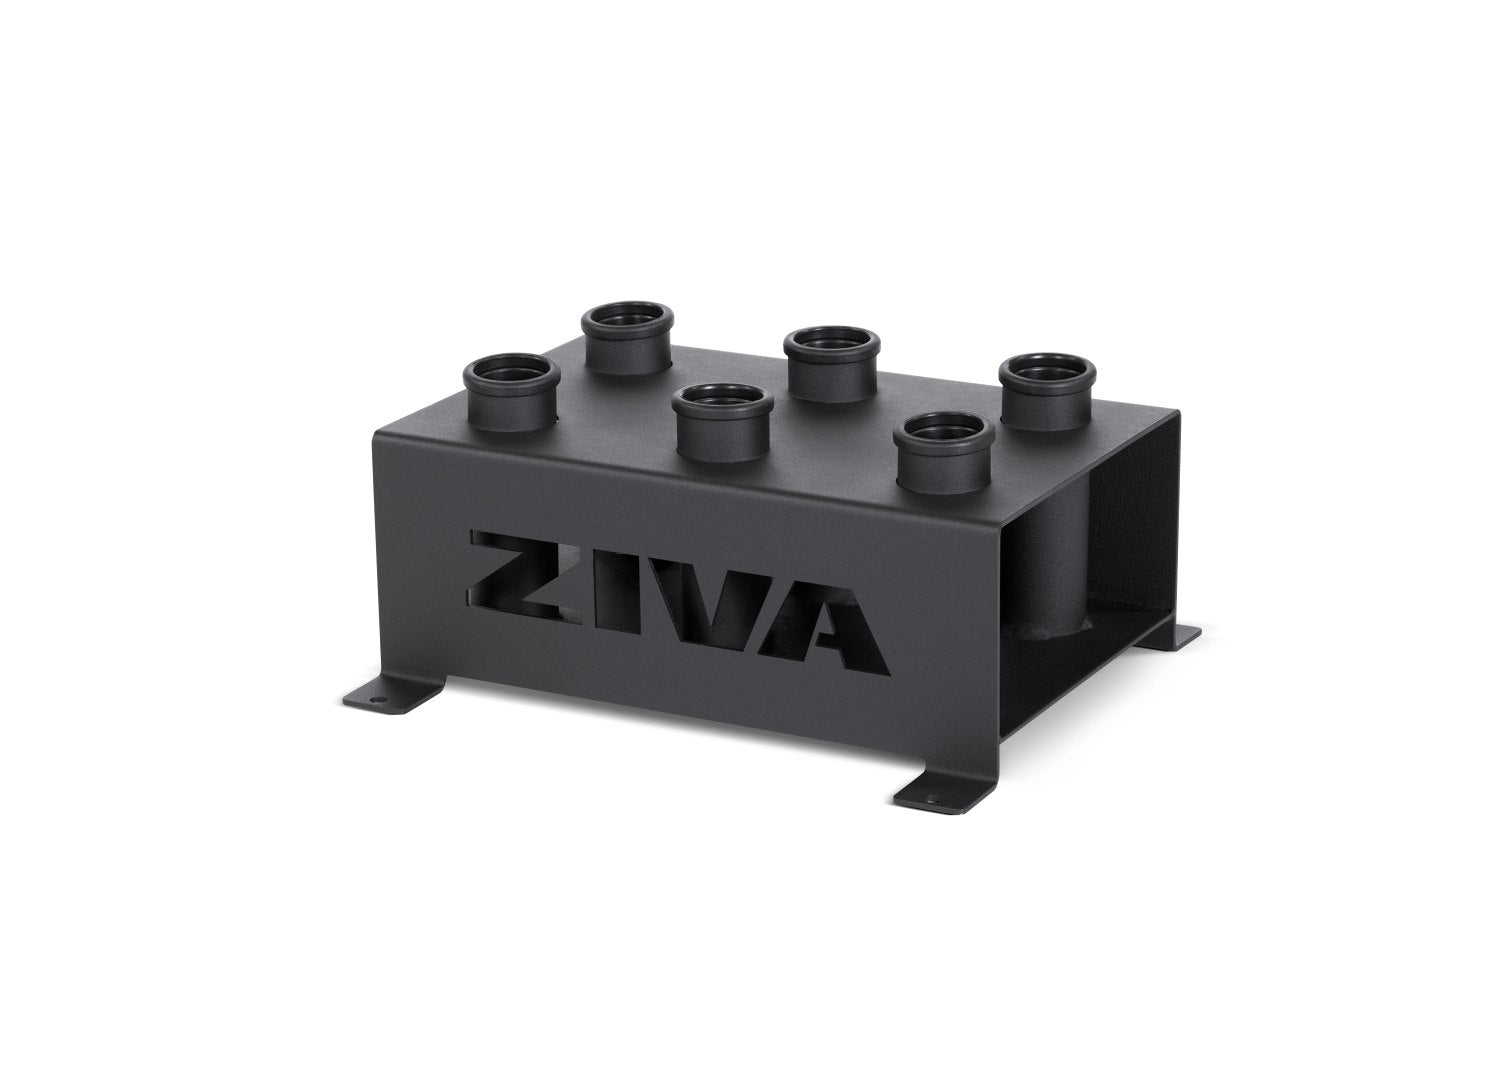 Ziva Olympic Barbell Storage $200 + gst